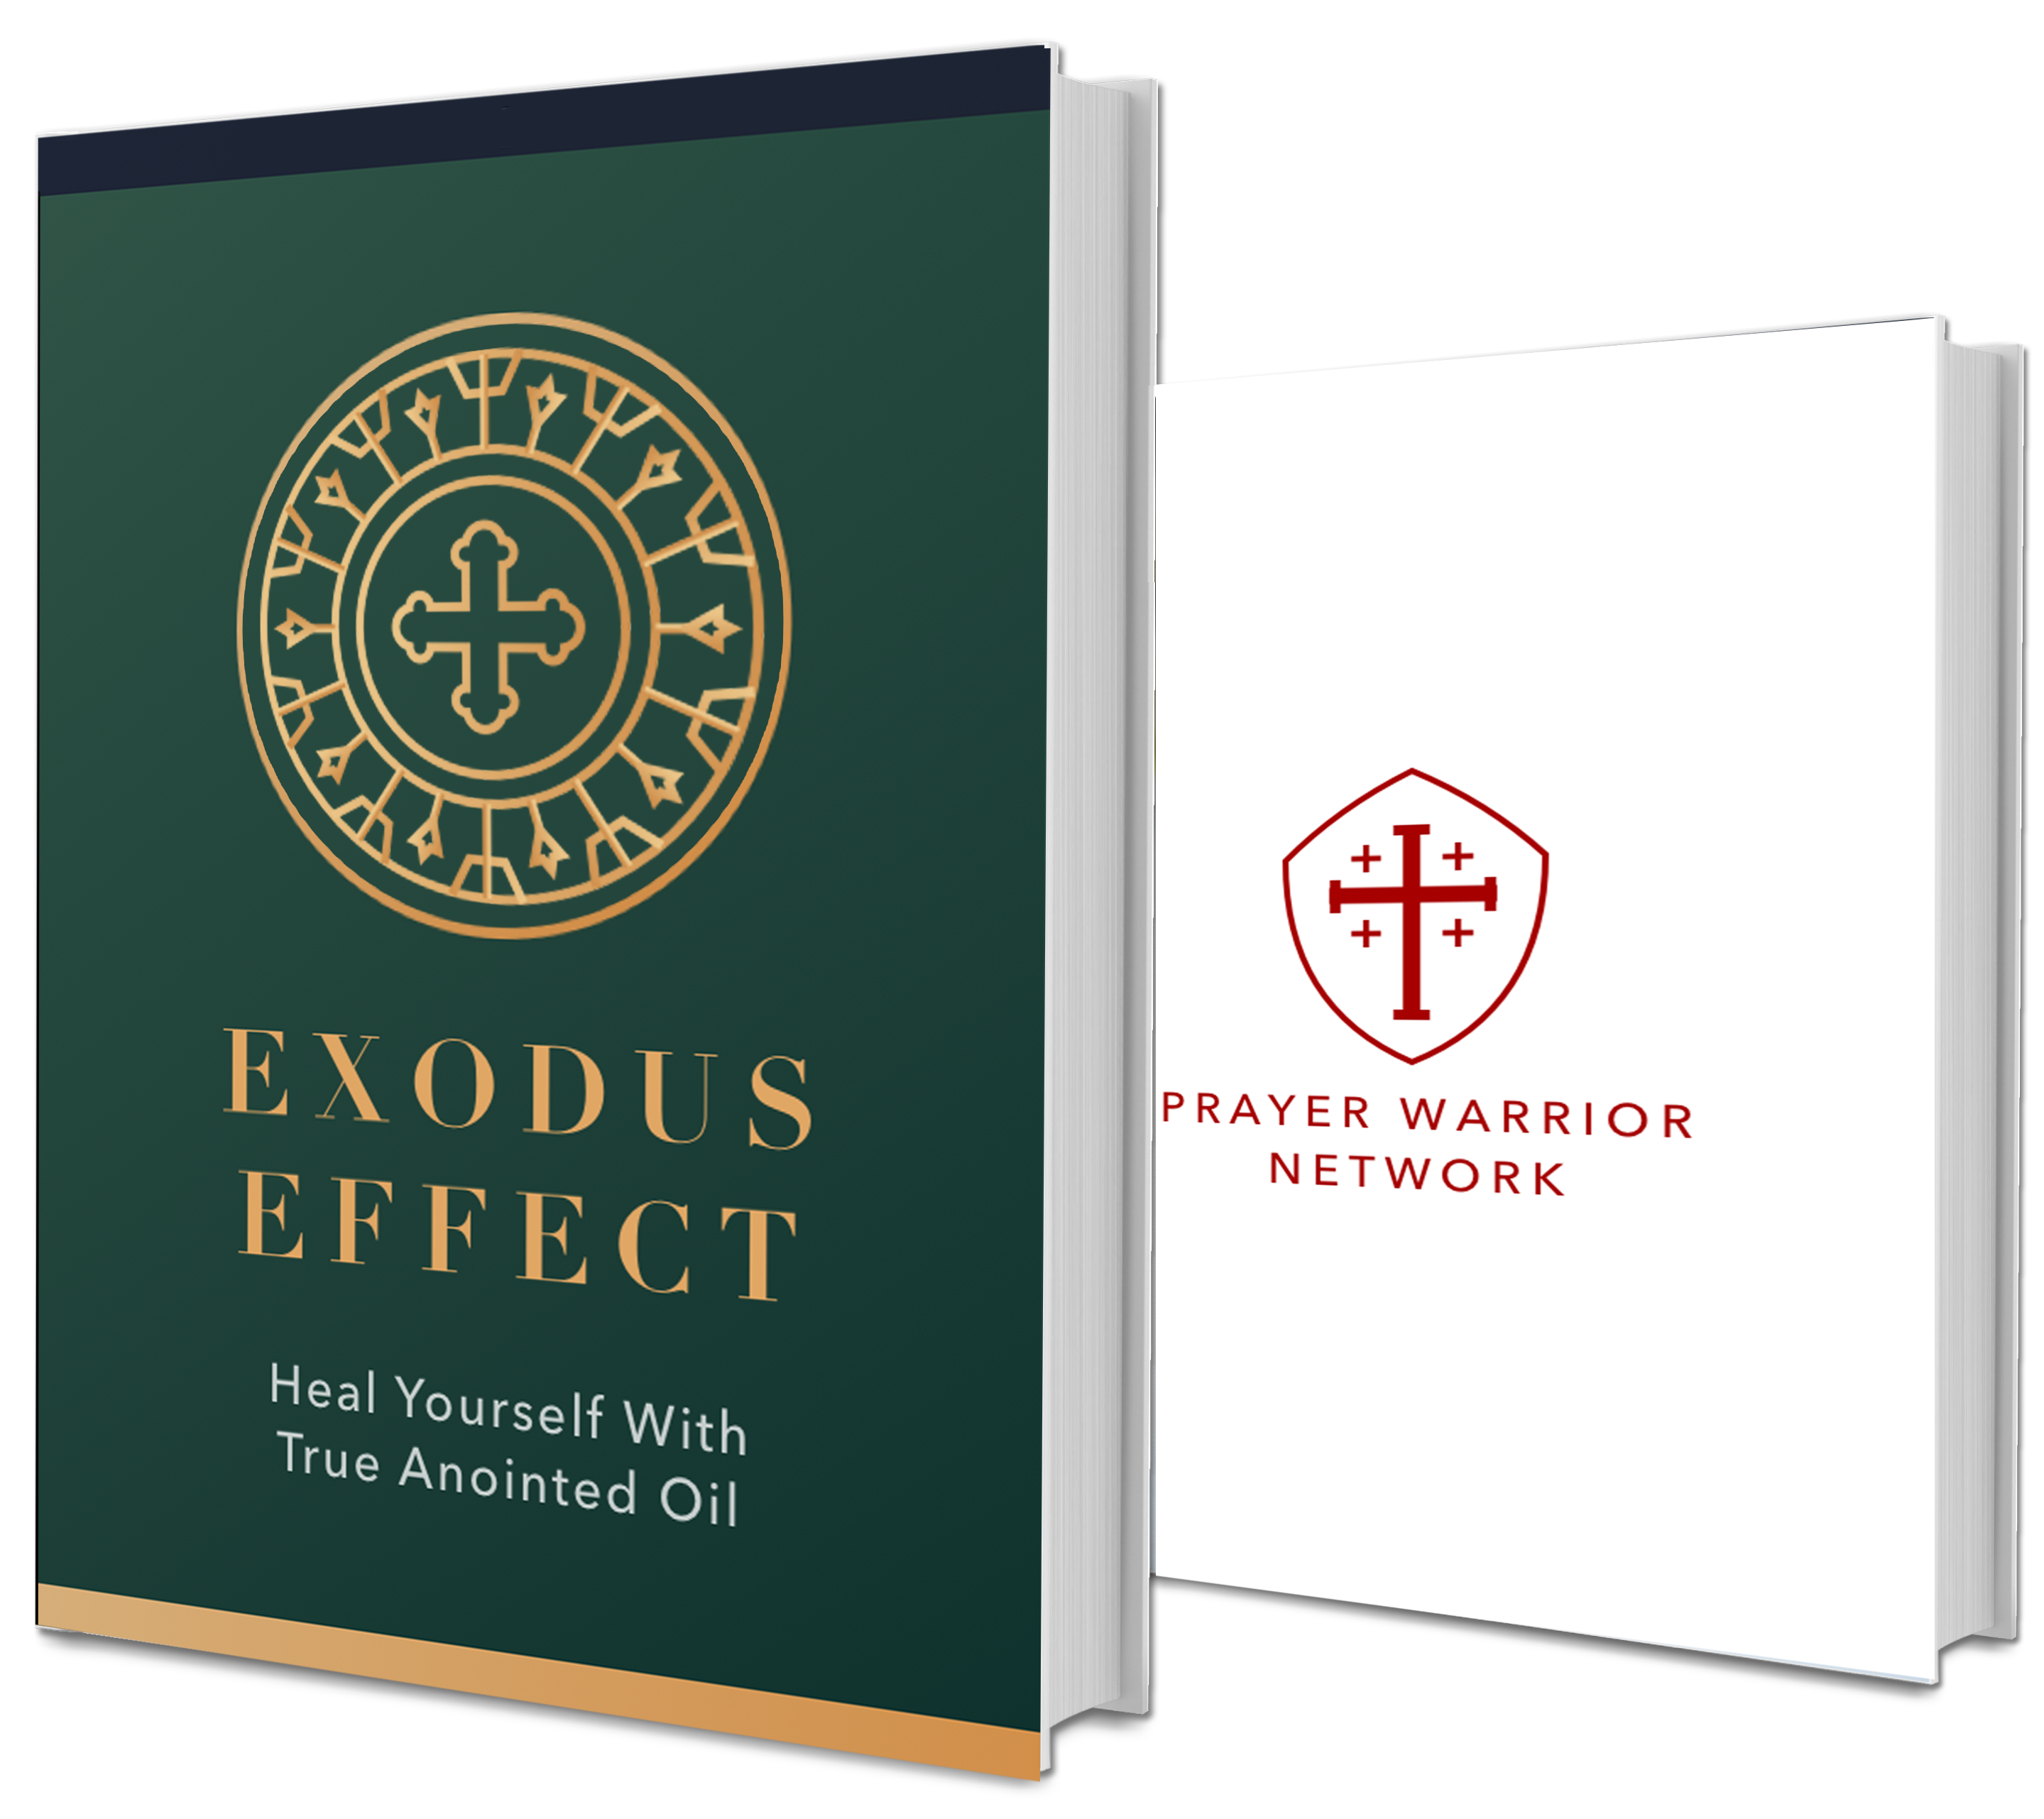 The Exodus Effect Plus The Prayer Warrior Network